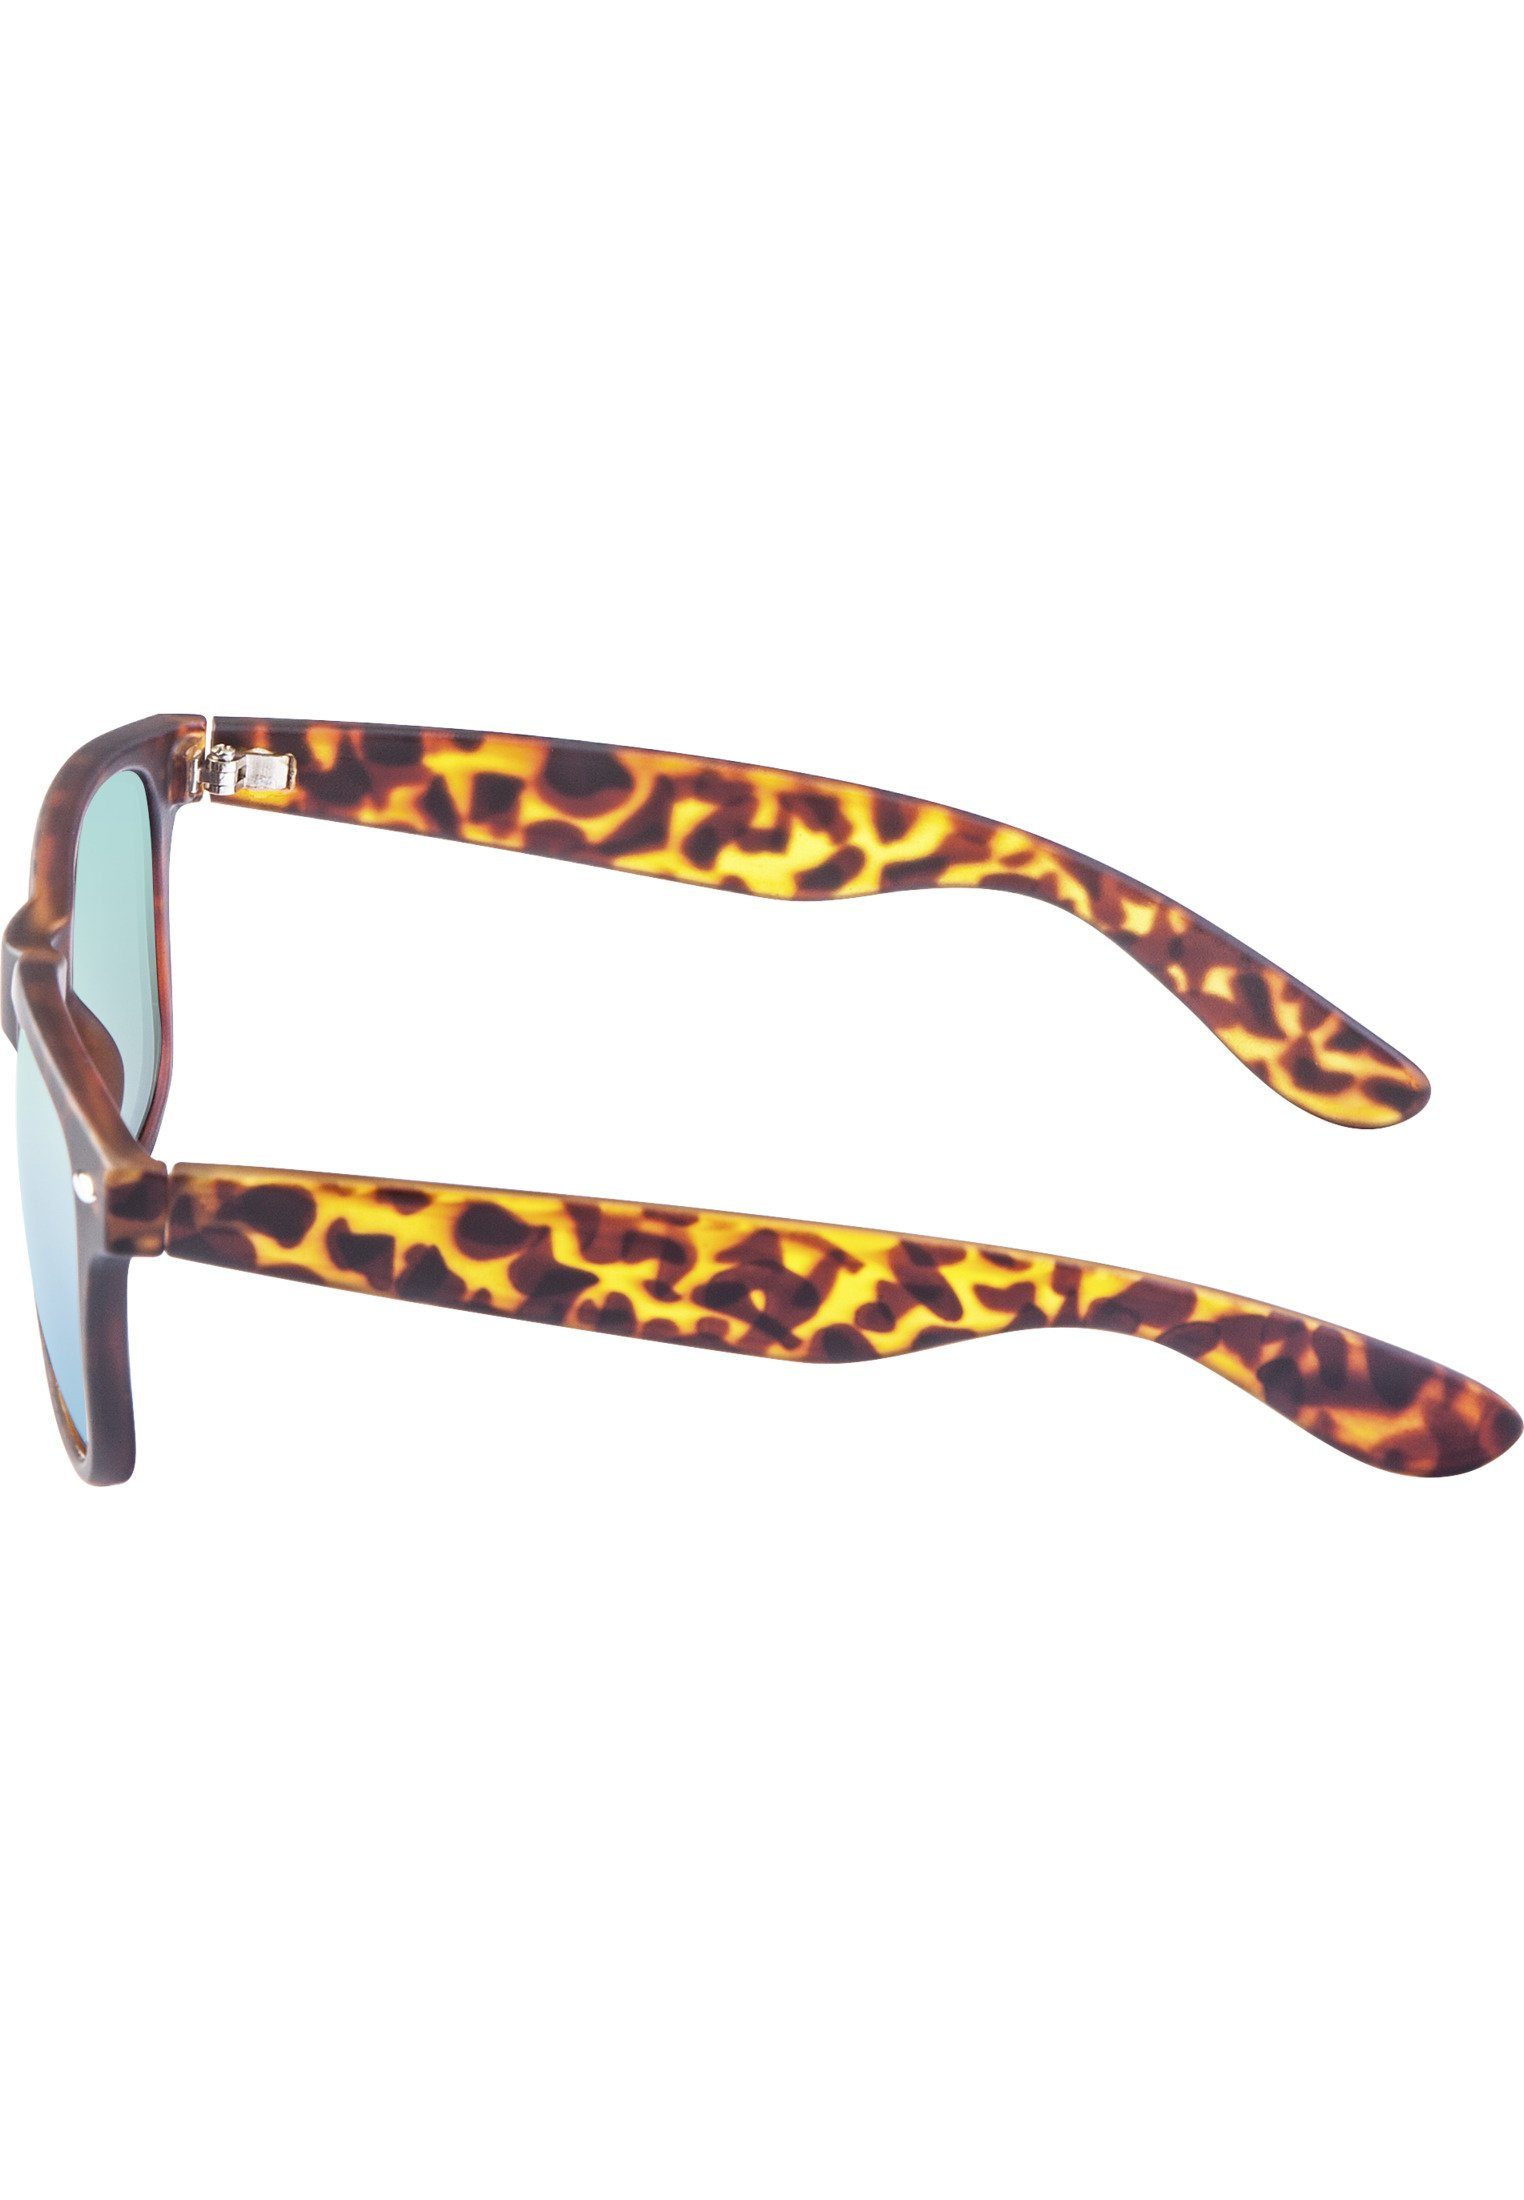 havanna/blue Sunglasses Accessoires Youth MSTRDS Likoma Sonnenbrille